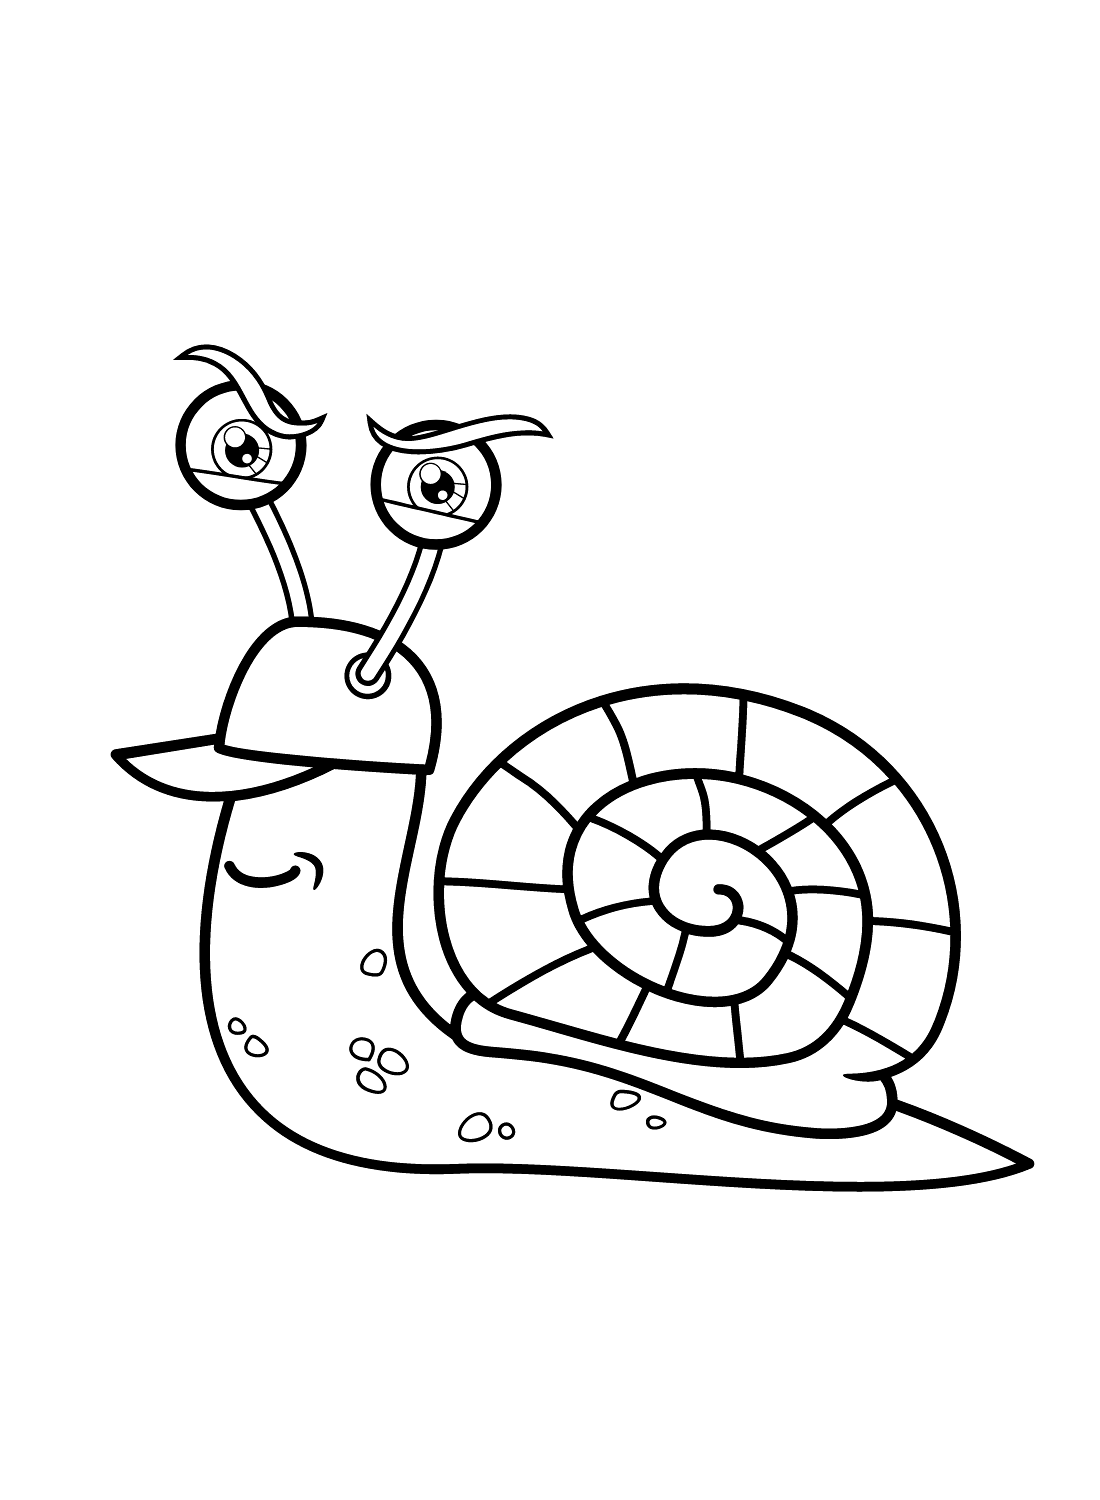 Funny Snail from Snail